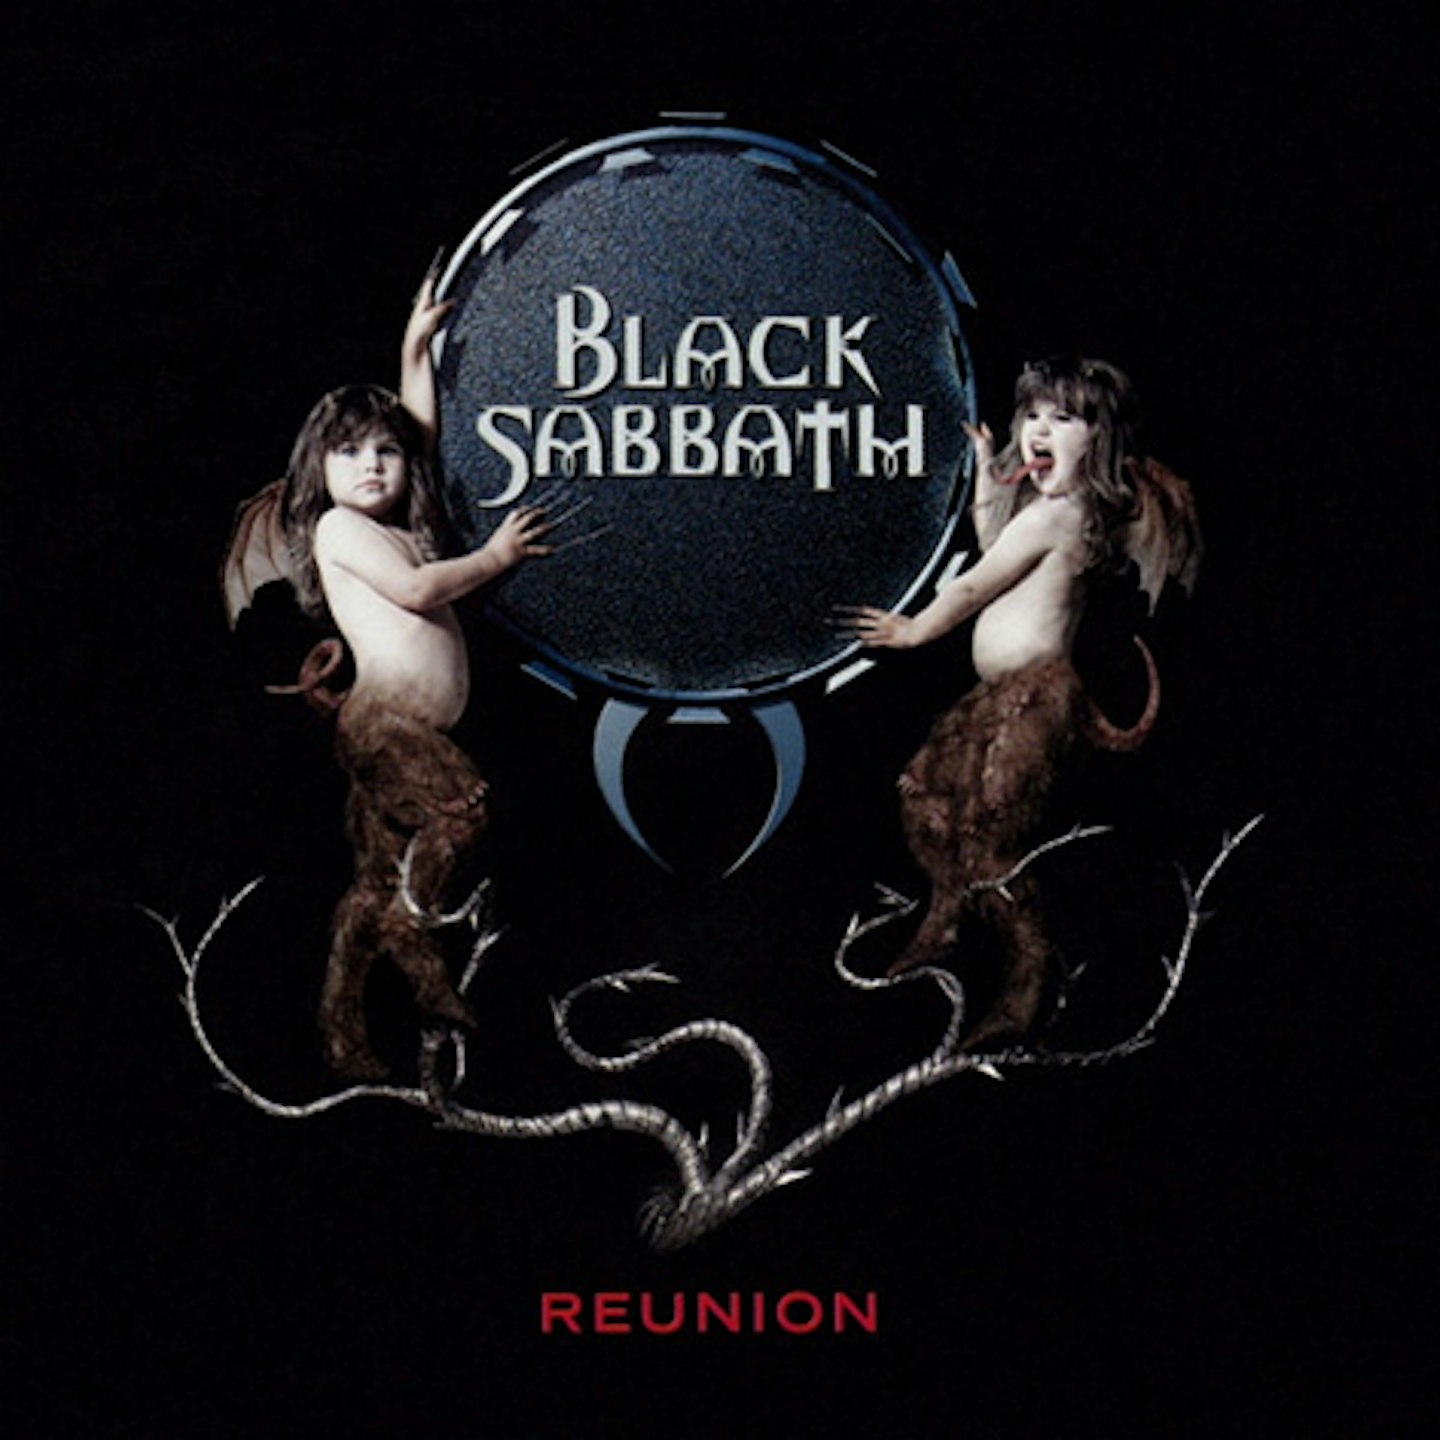 Black Sabbath: Their Best Albums Ranked